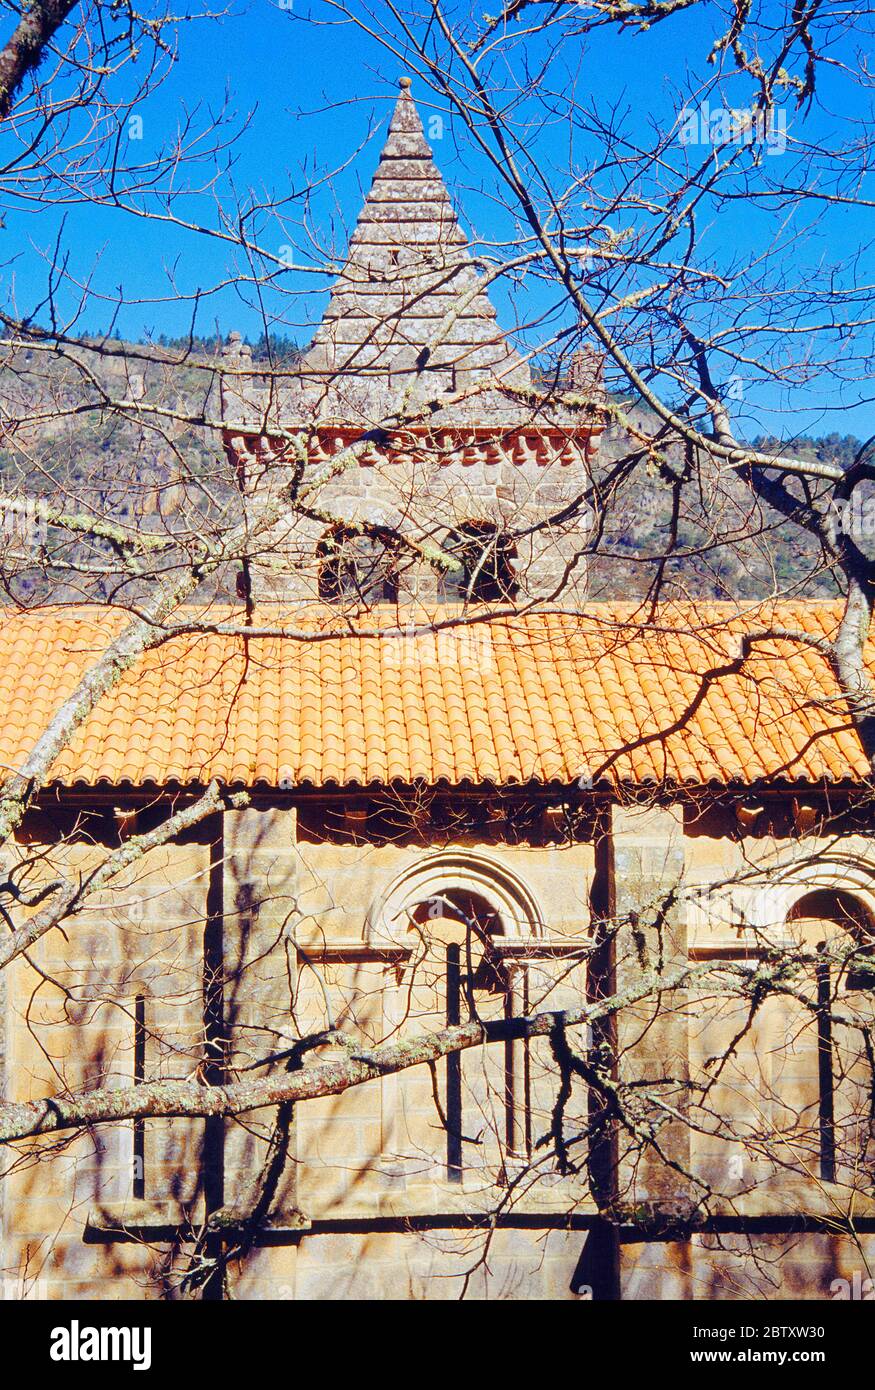 Monastery of Santa Cristina. Ribas de Sil, Ribeira Sacra, Orense province, Galicia, Spain. Stock Photo